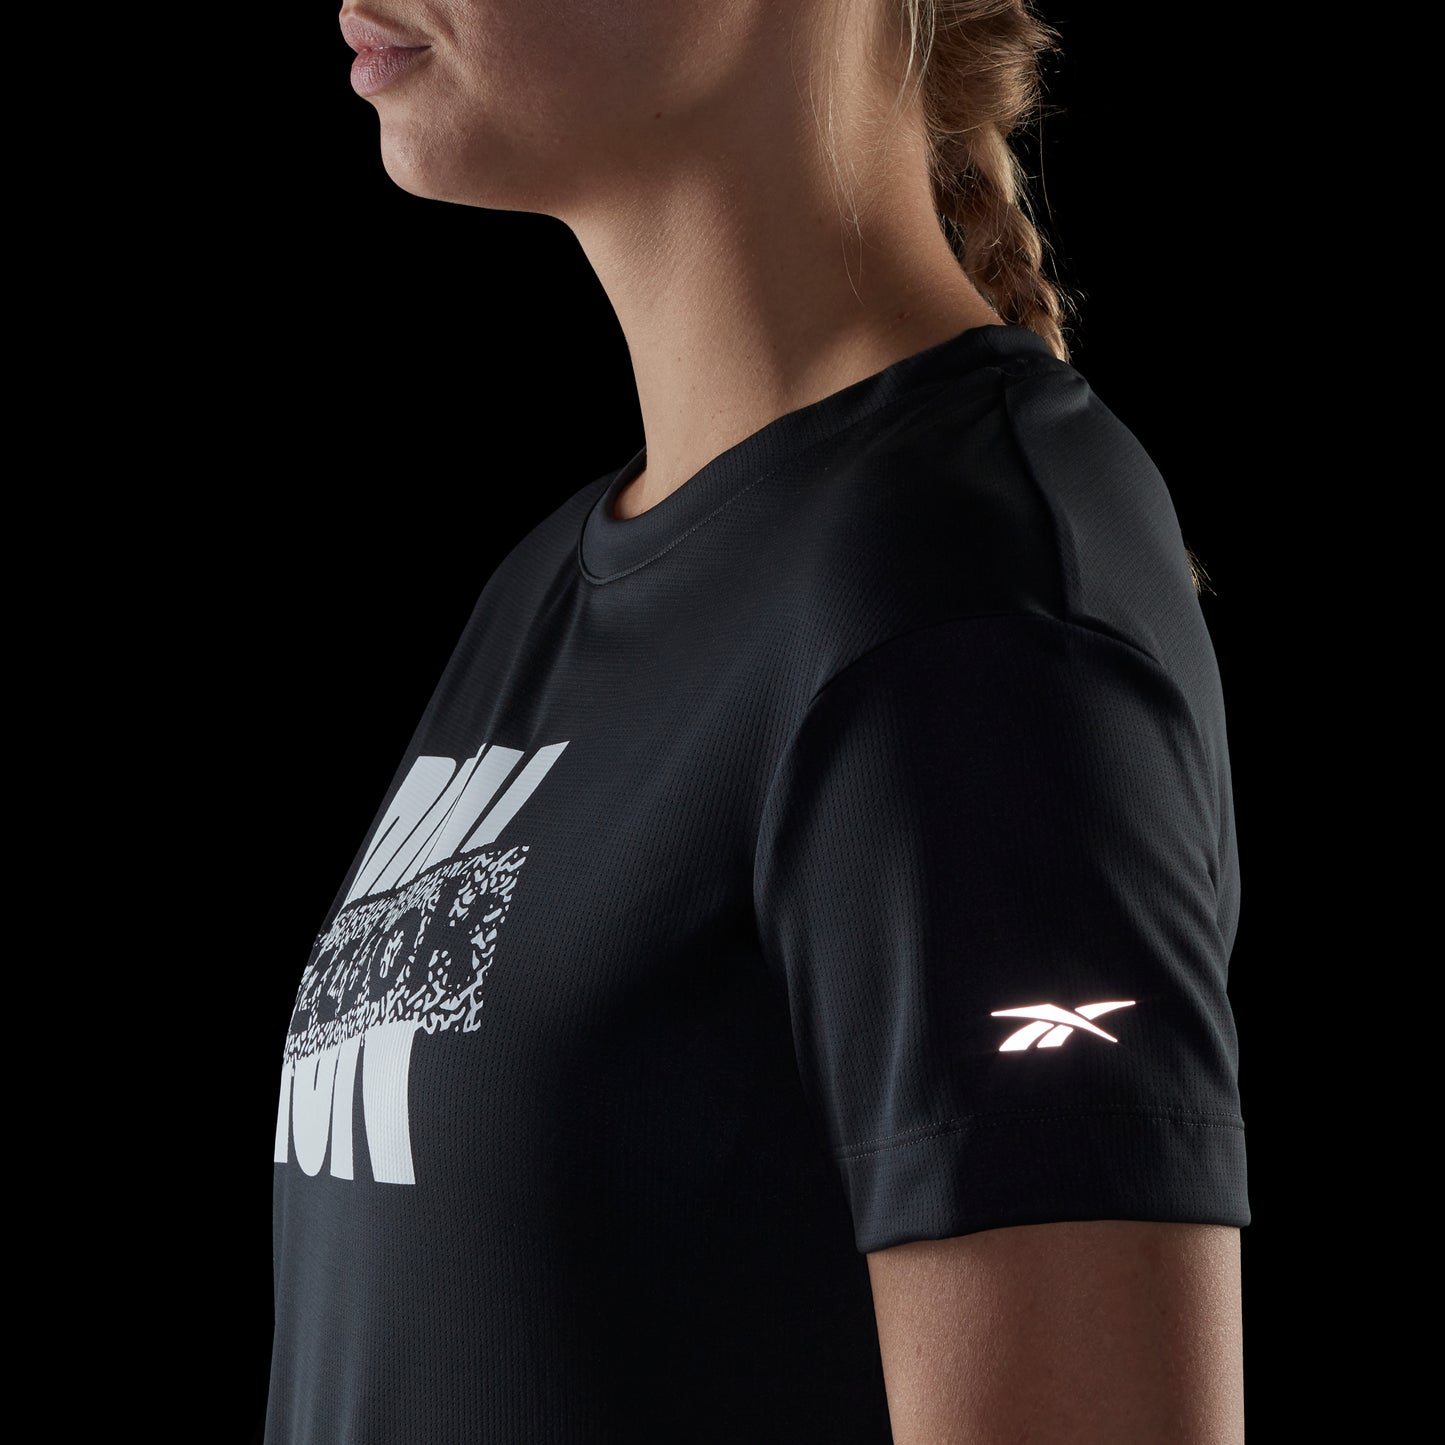 Reebok Apparel Women Workout Ready Speedwick T-Shirt BLACK – Reebok Canada